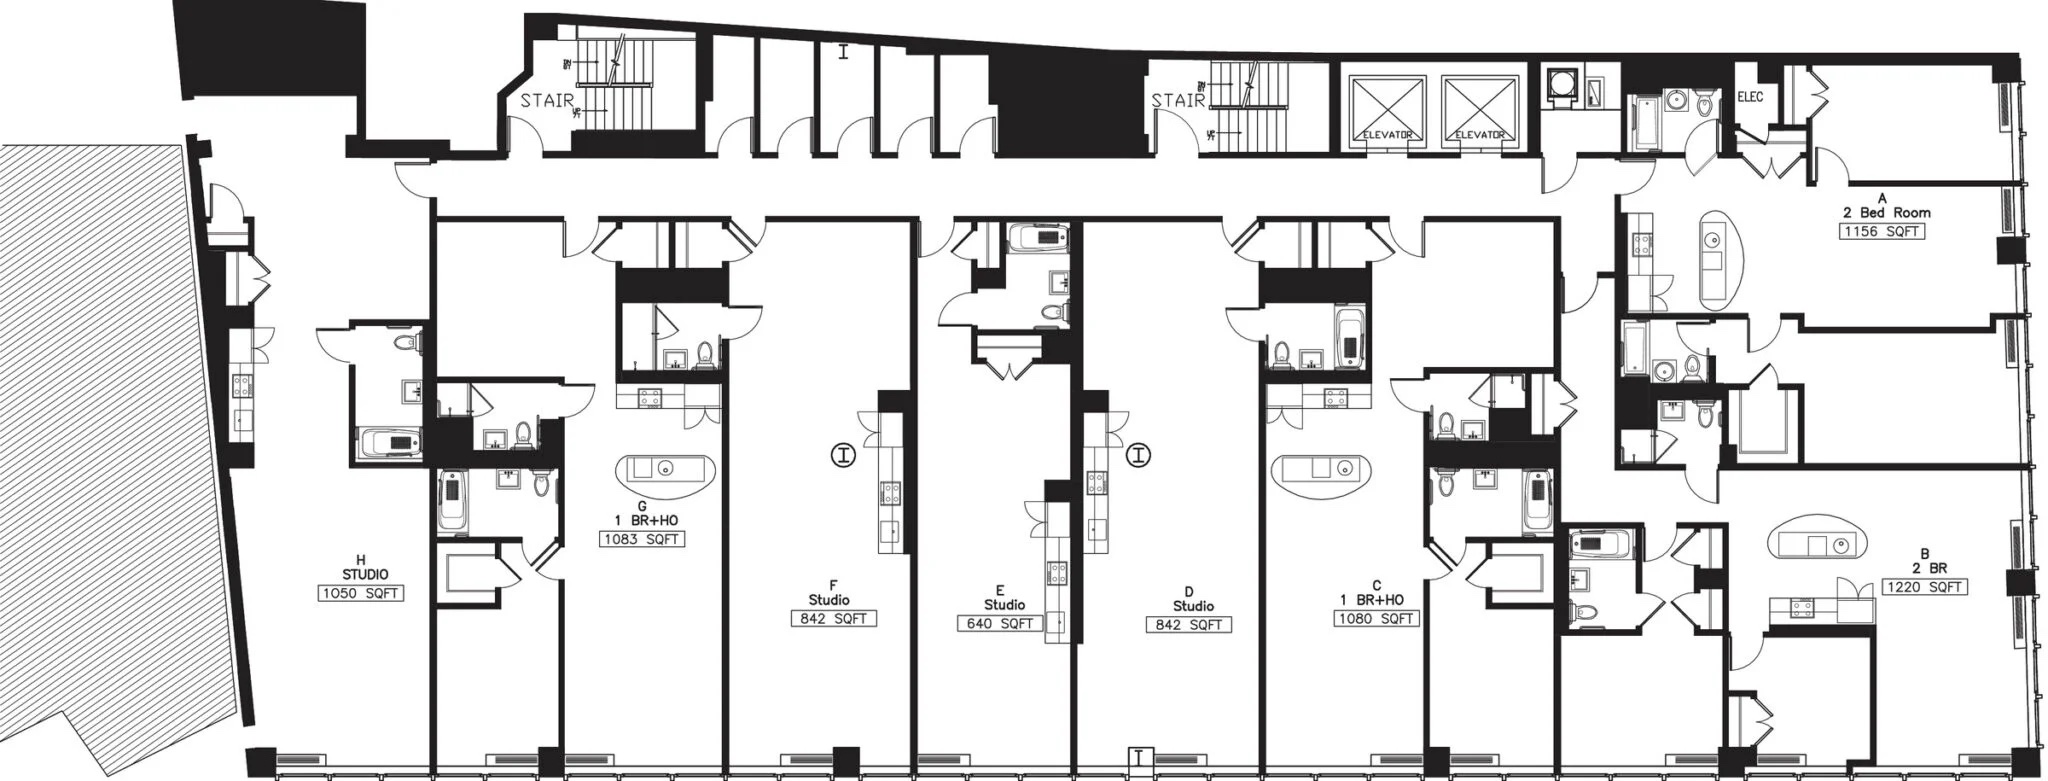 90 William Street condo floor plan, New York 